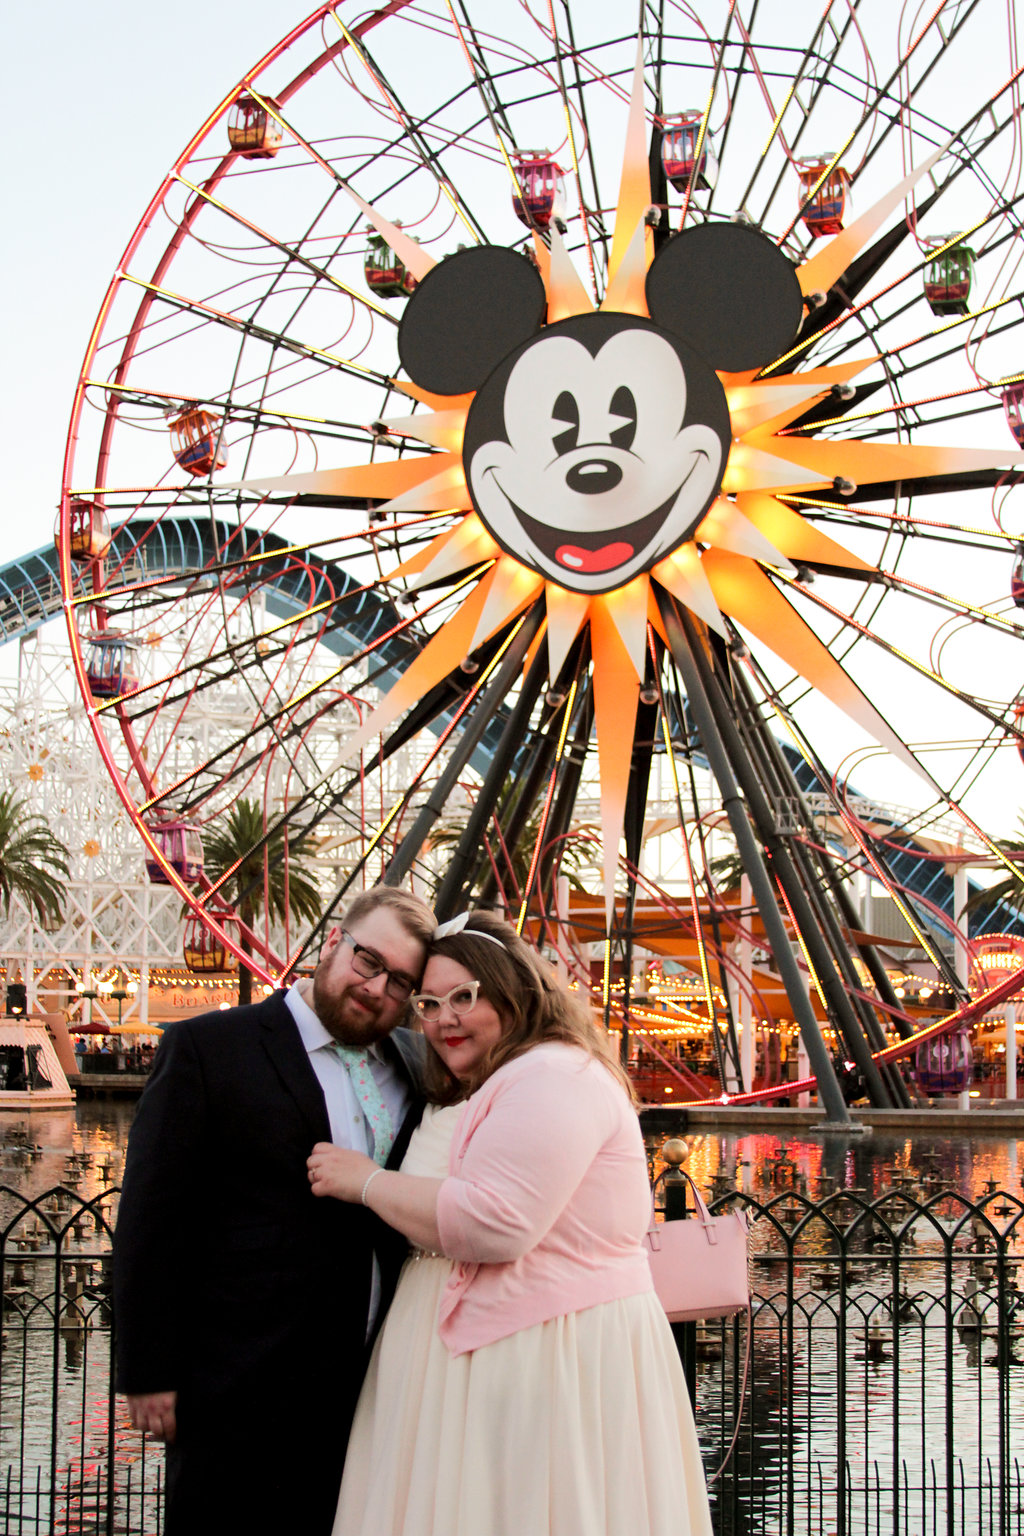 Steph and Shelby's Wedding Day Disneyland Photo Shoot! 